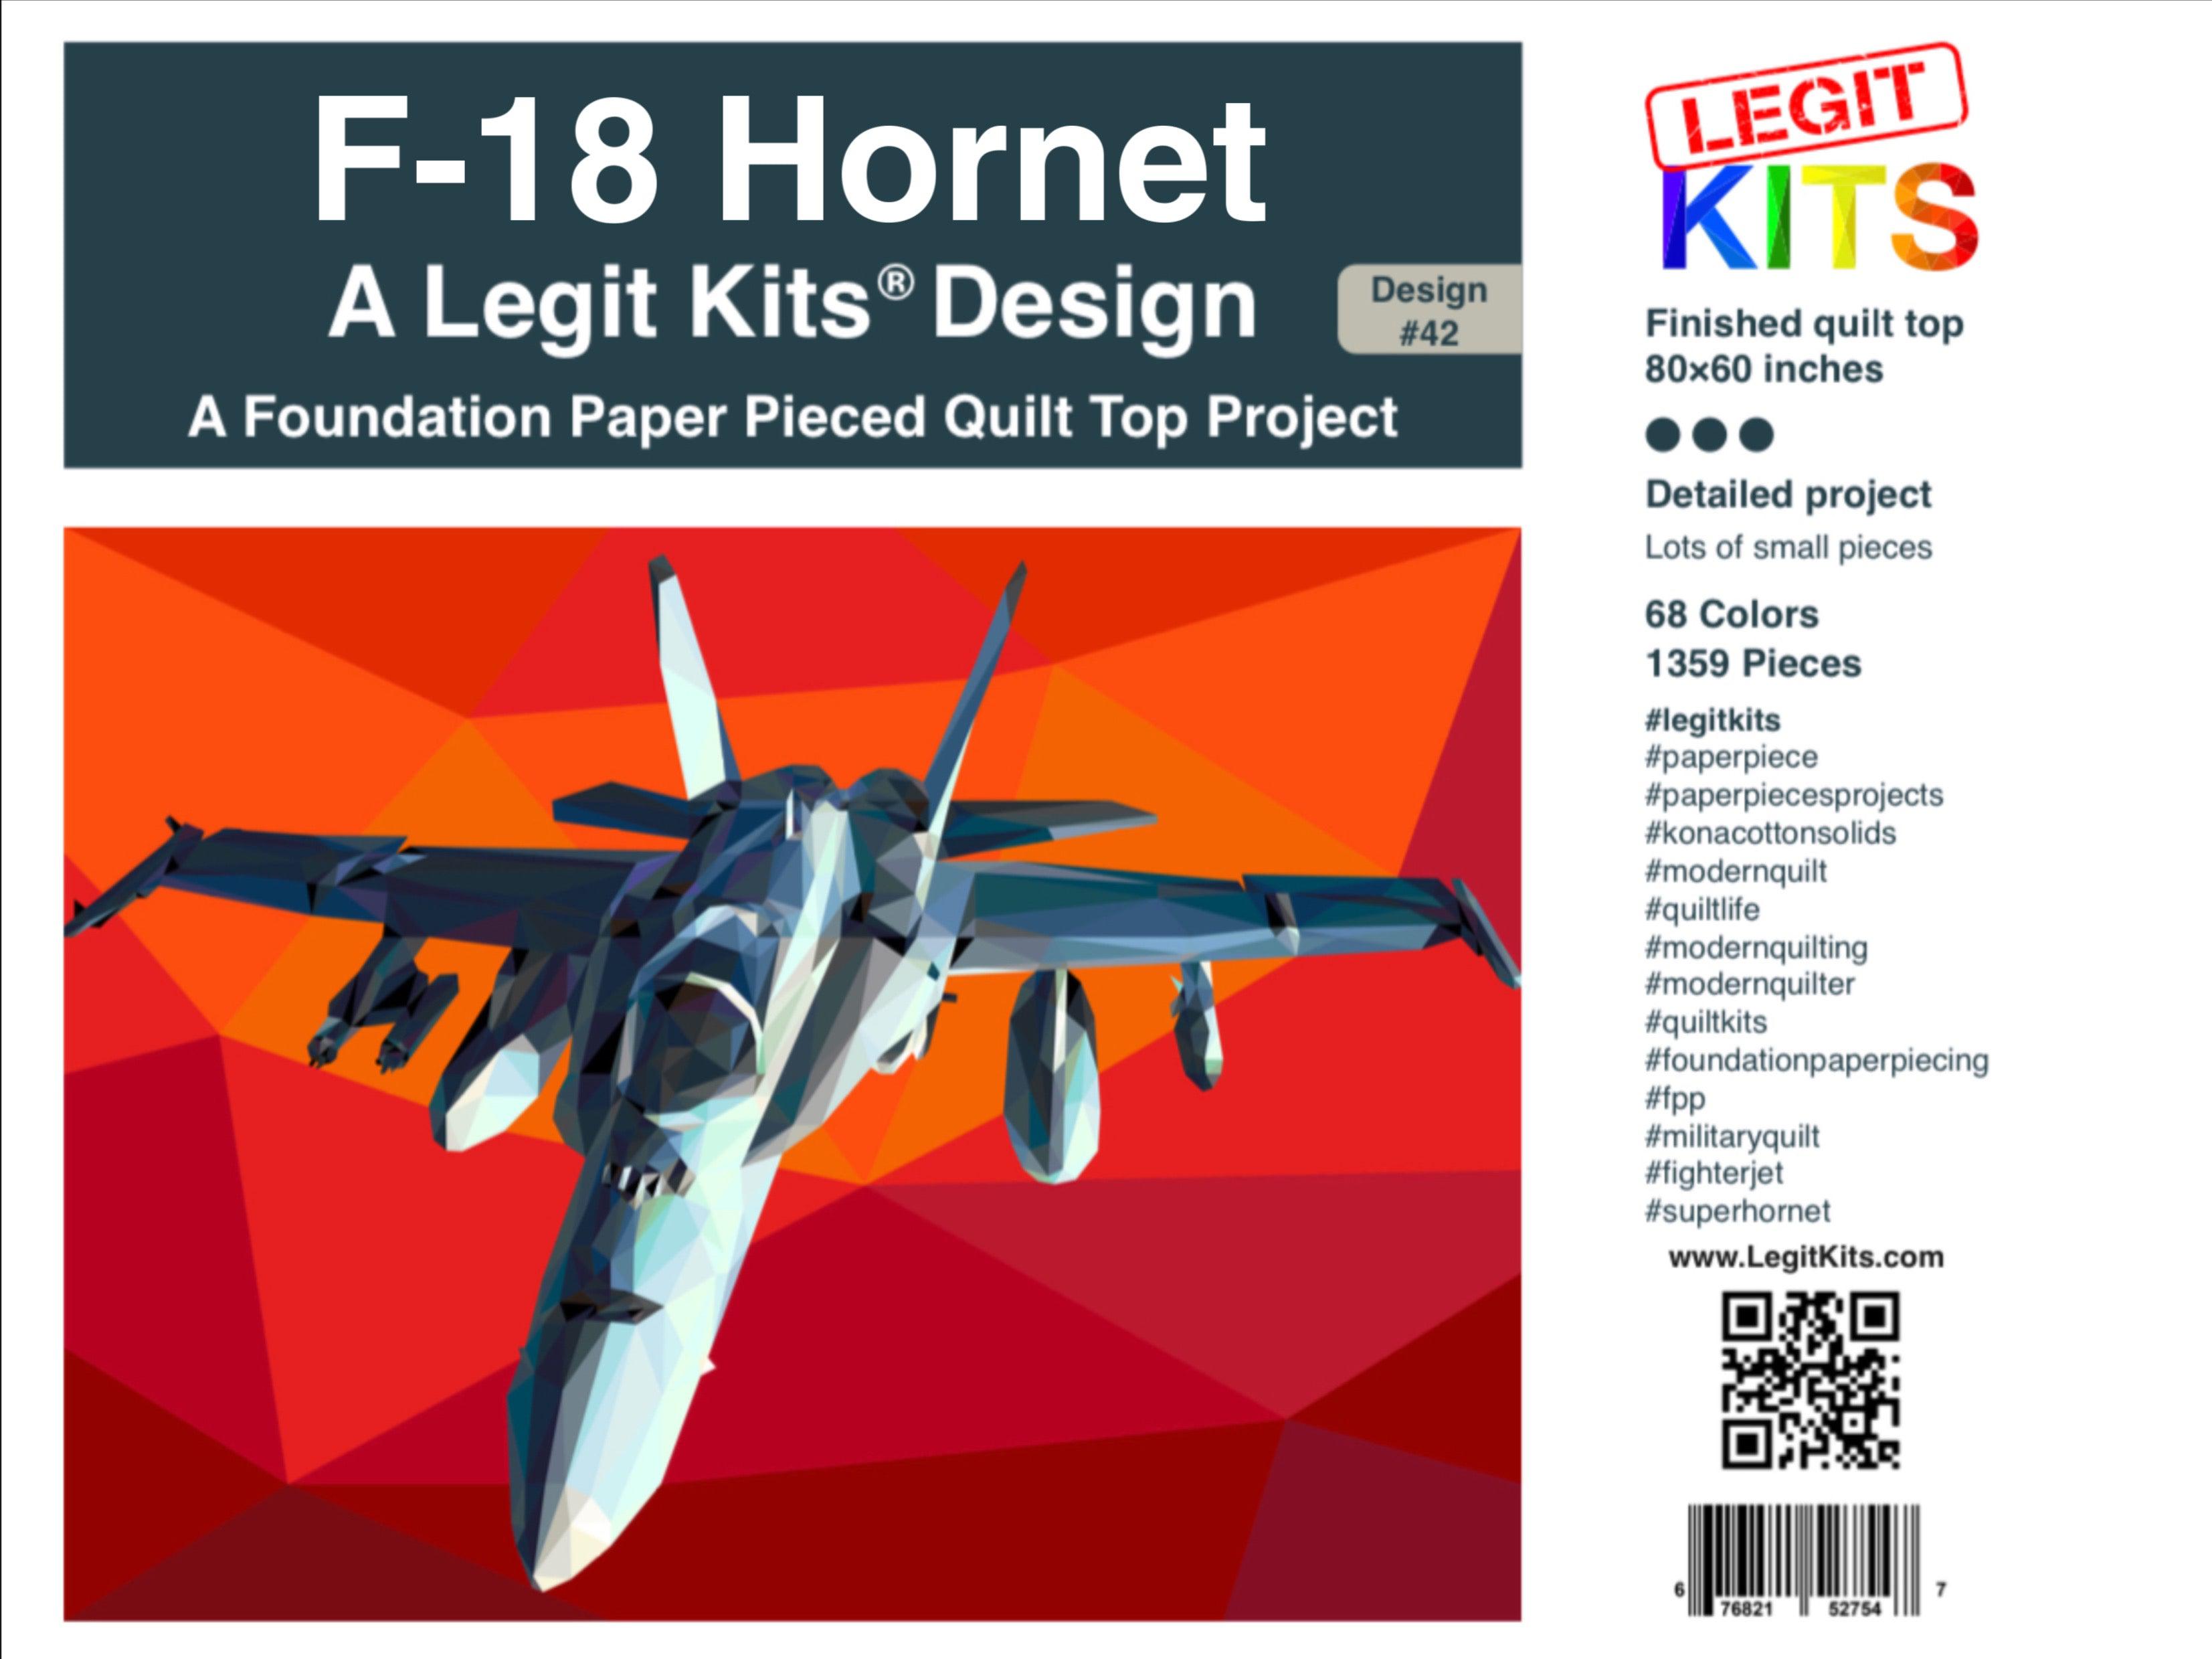 F-18 Hornet Pattern-Legit Kits-My Favorite Quilt Store